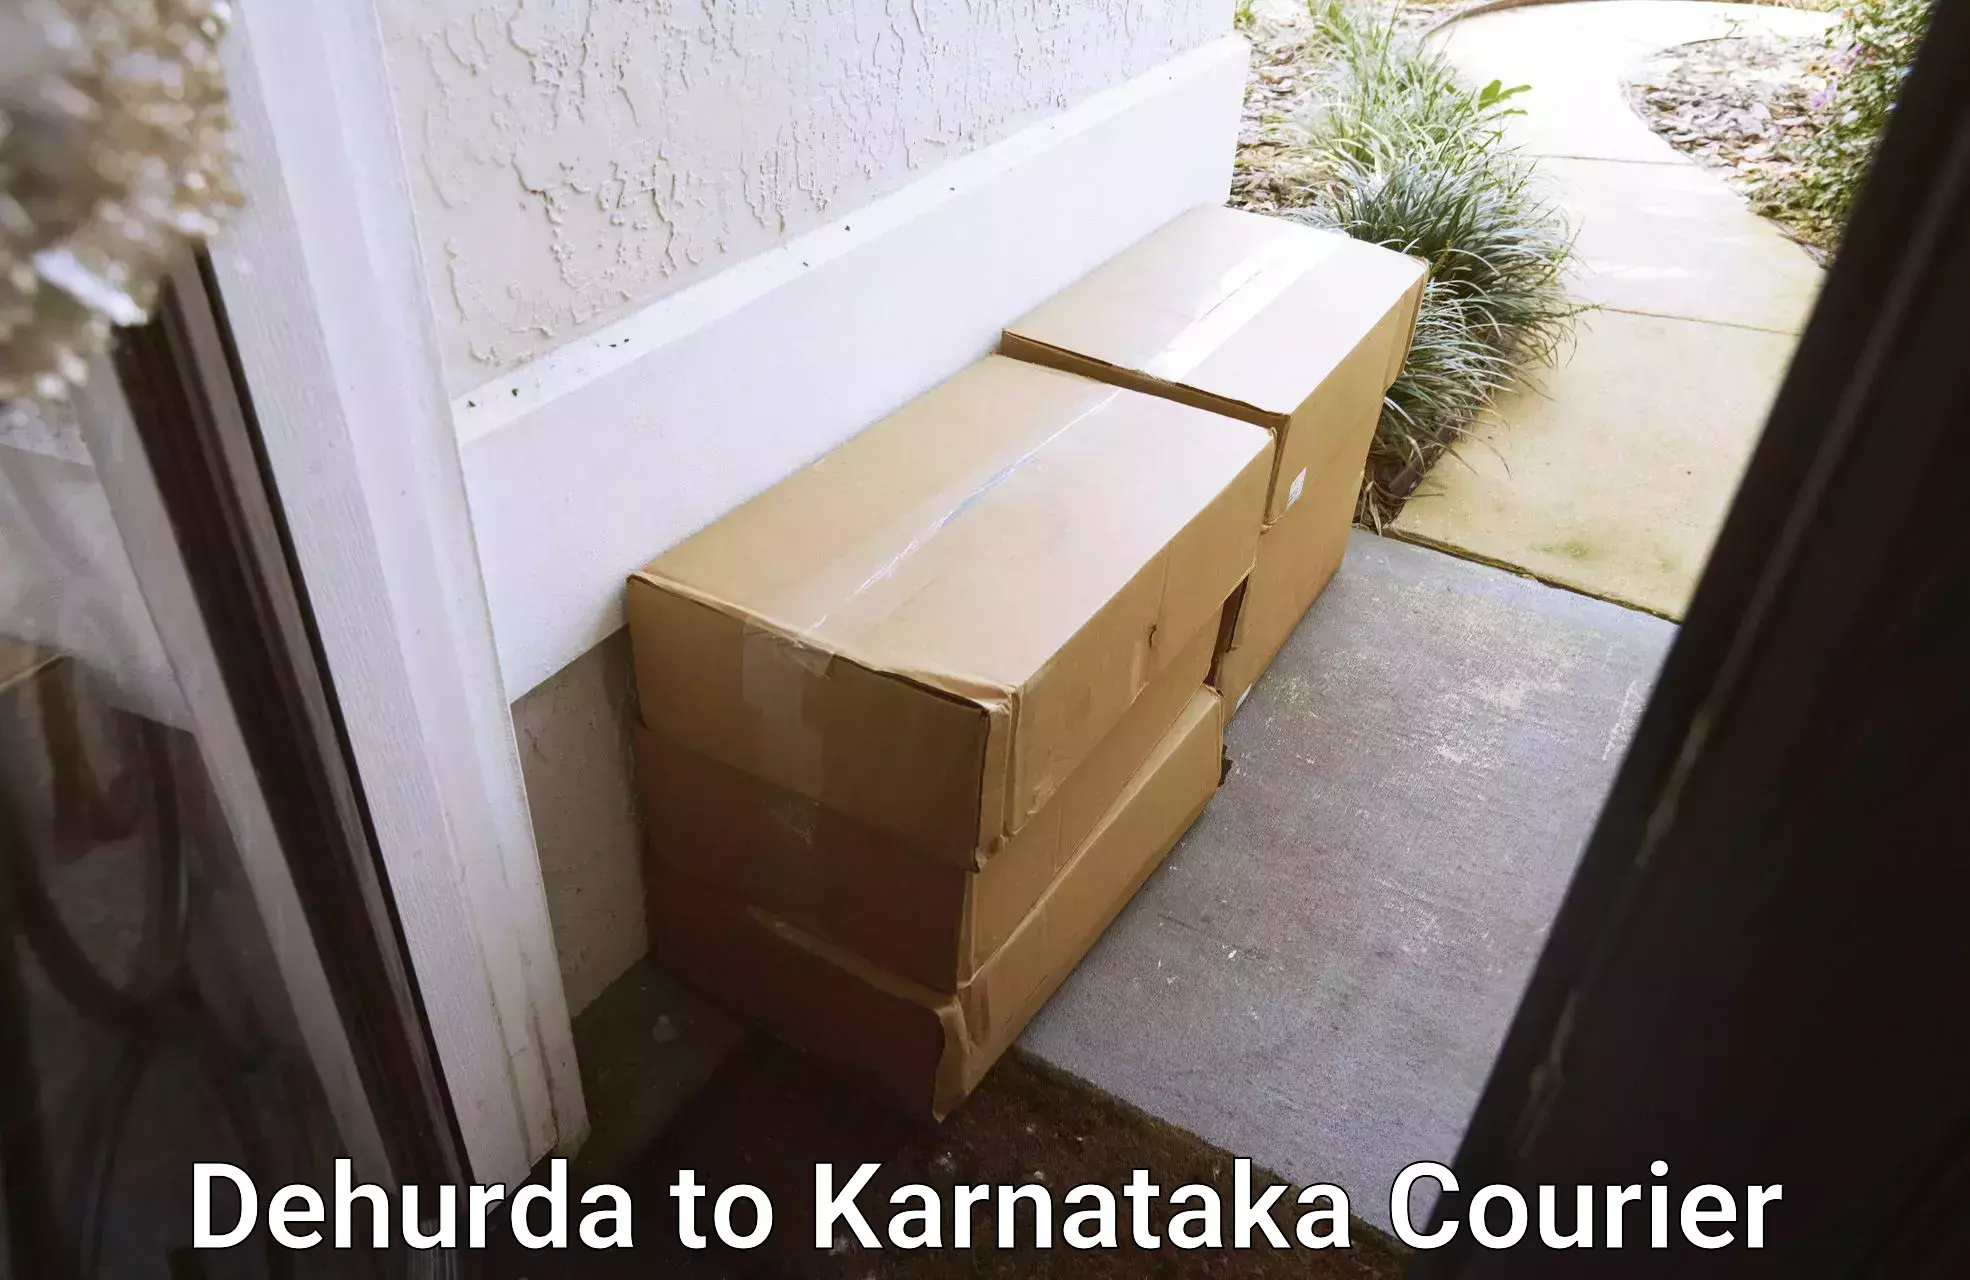 Easy access courier services in Dehurda to Gulbarga